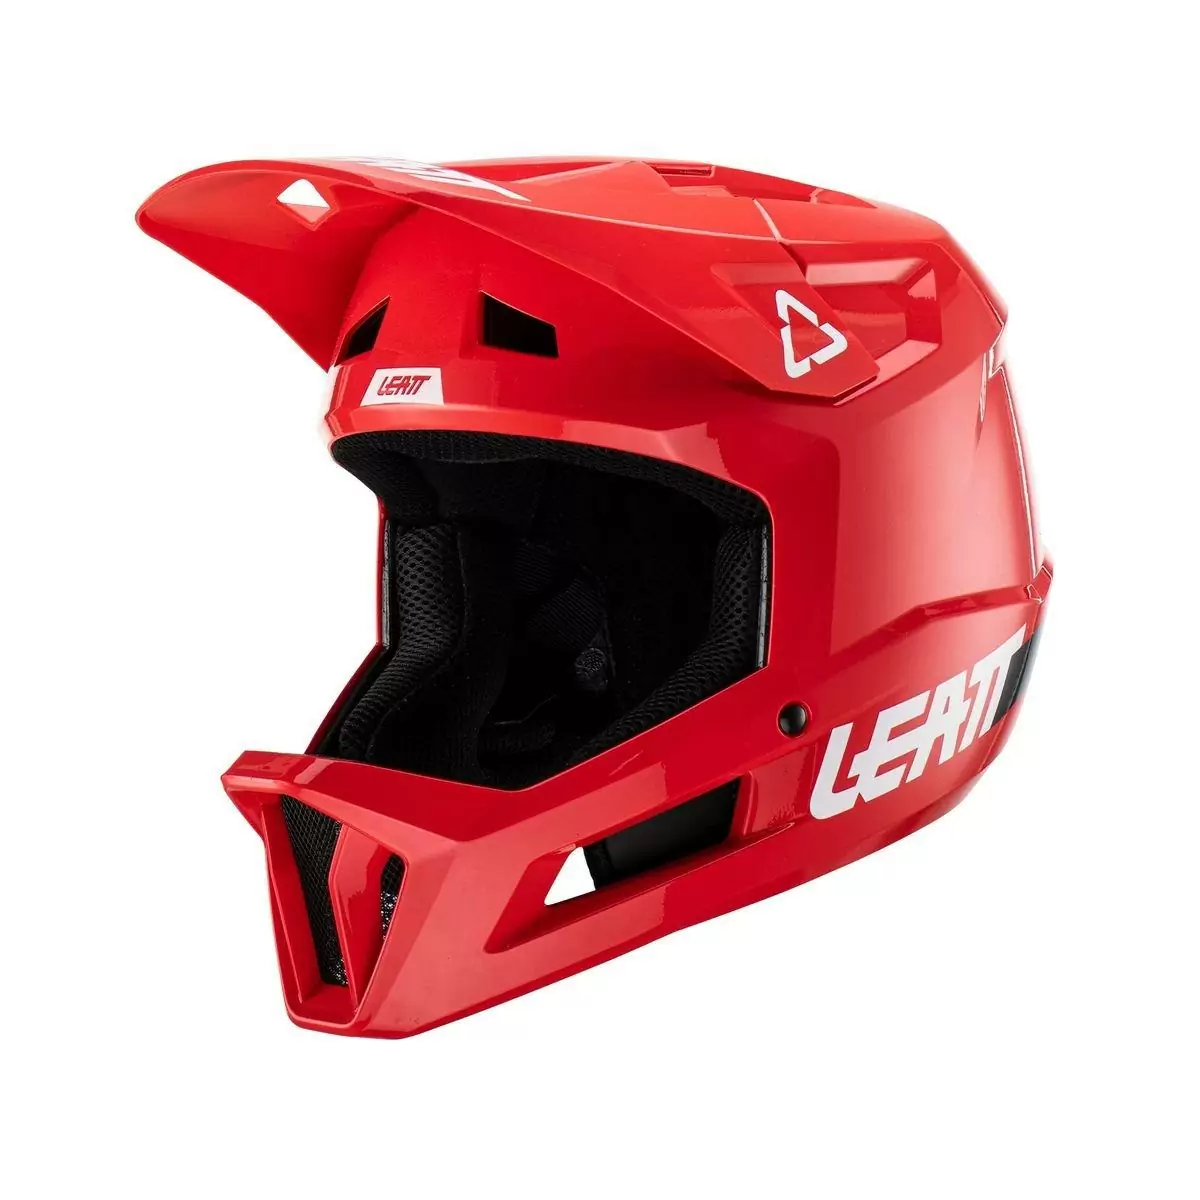 Gravity 1.0 MTB Fullface Helmet Red Size XS (53-54cm) - image